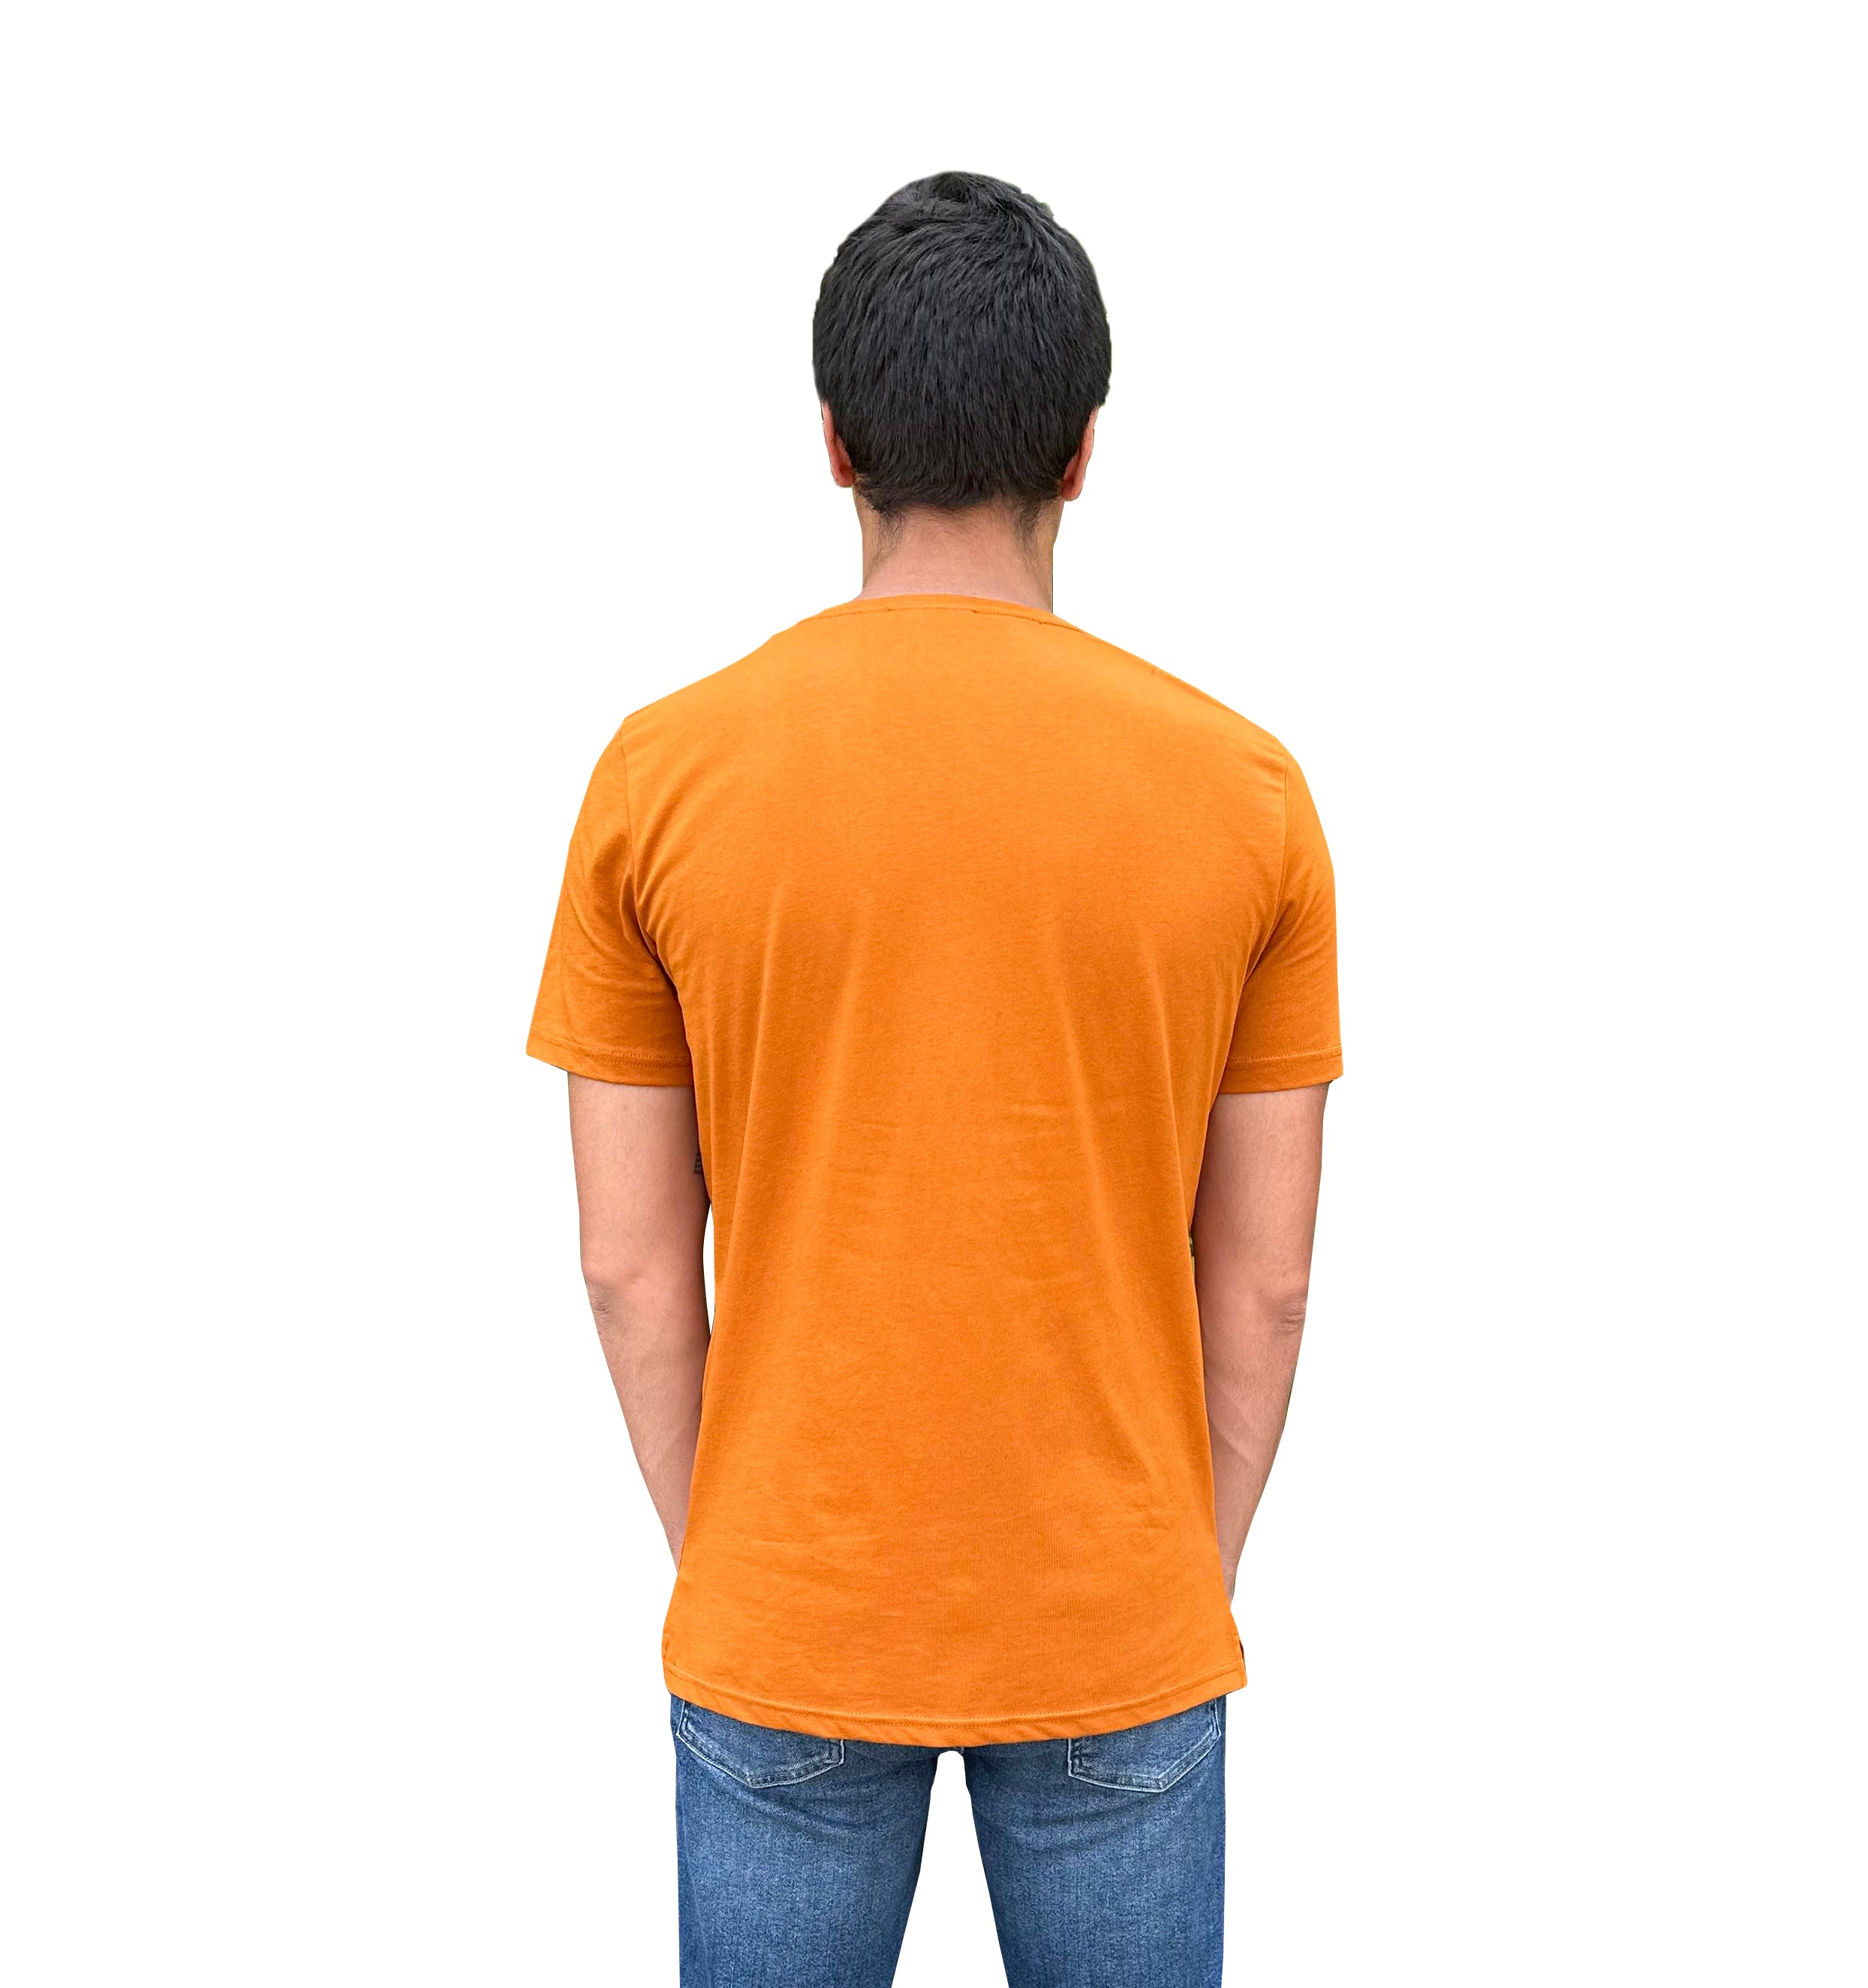 Men's Short Sleeve Crewneck T-Shirt in 100% Cotton - Wear Sierra